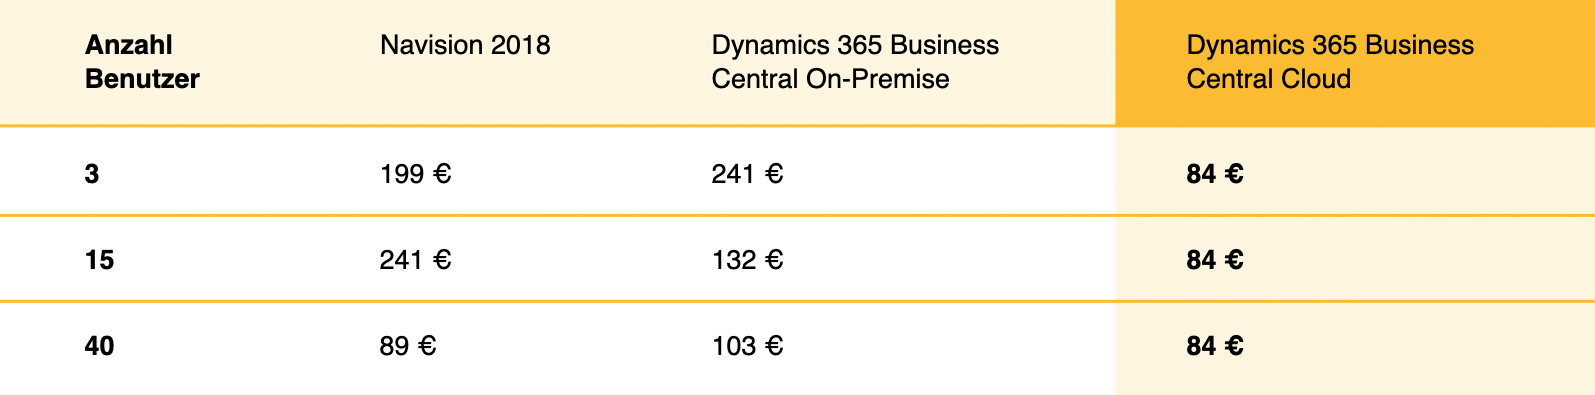 Business Central comparison calculation